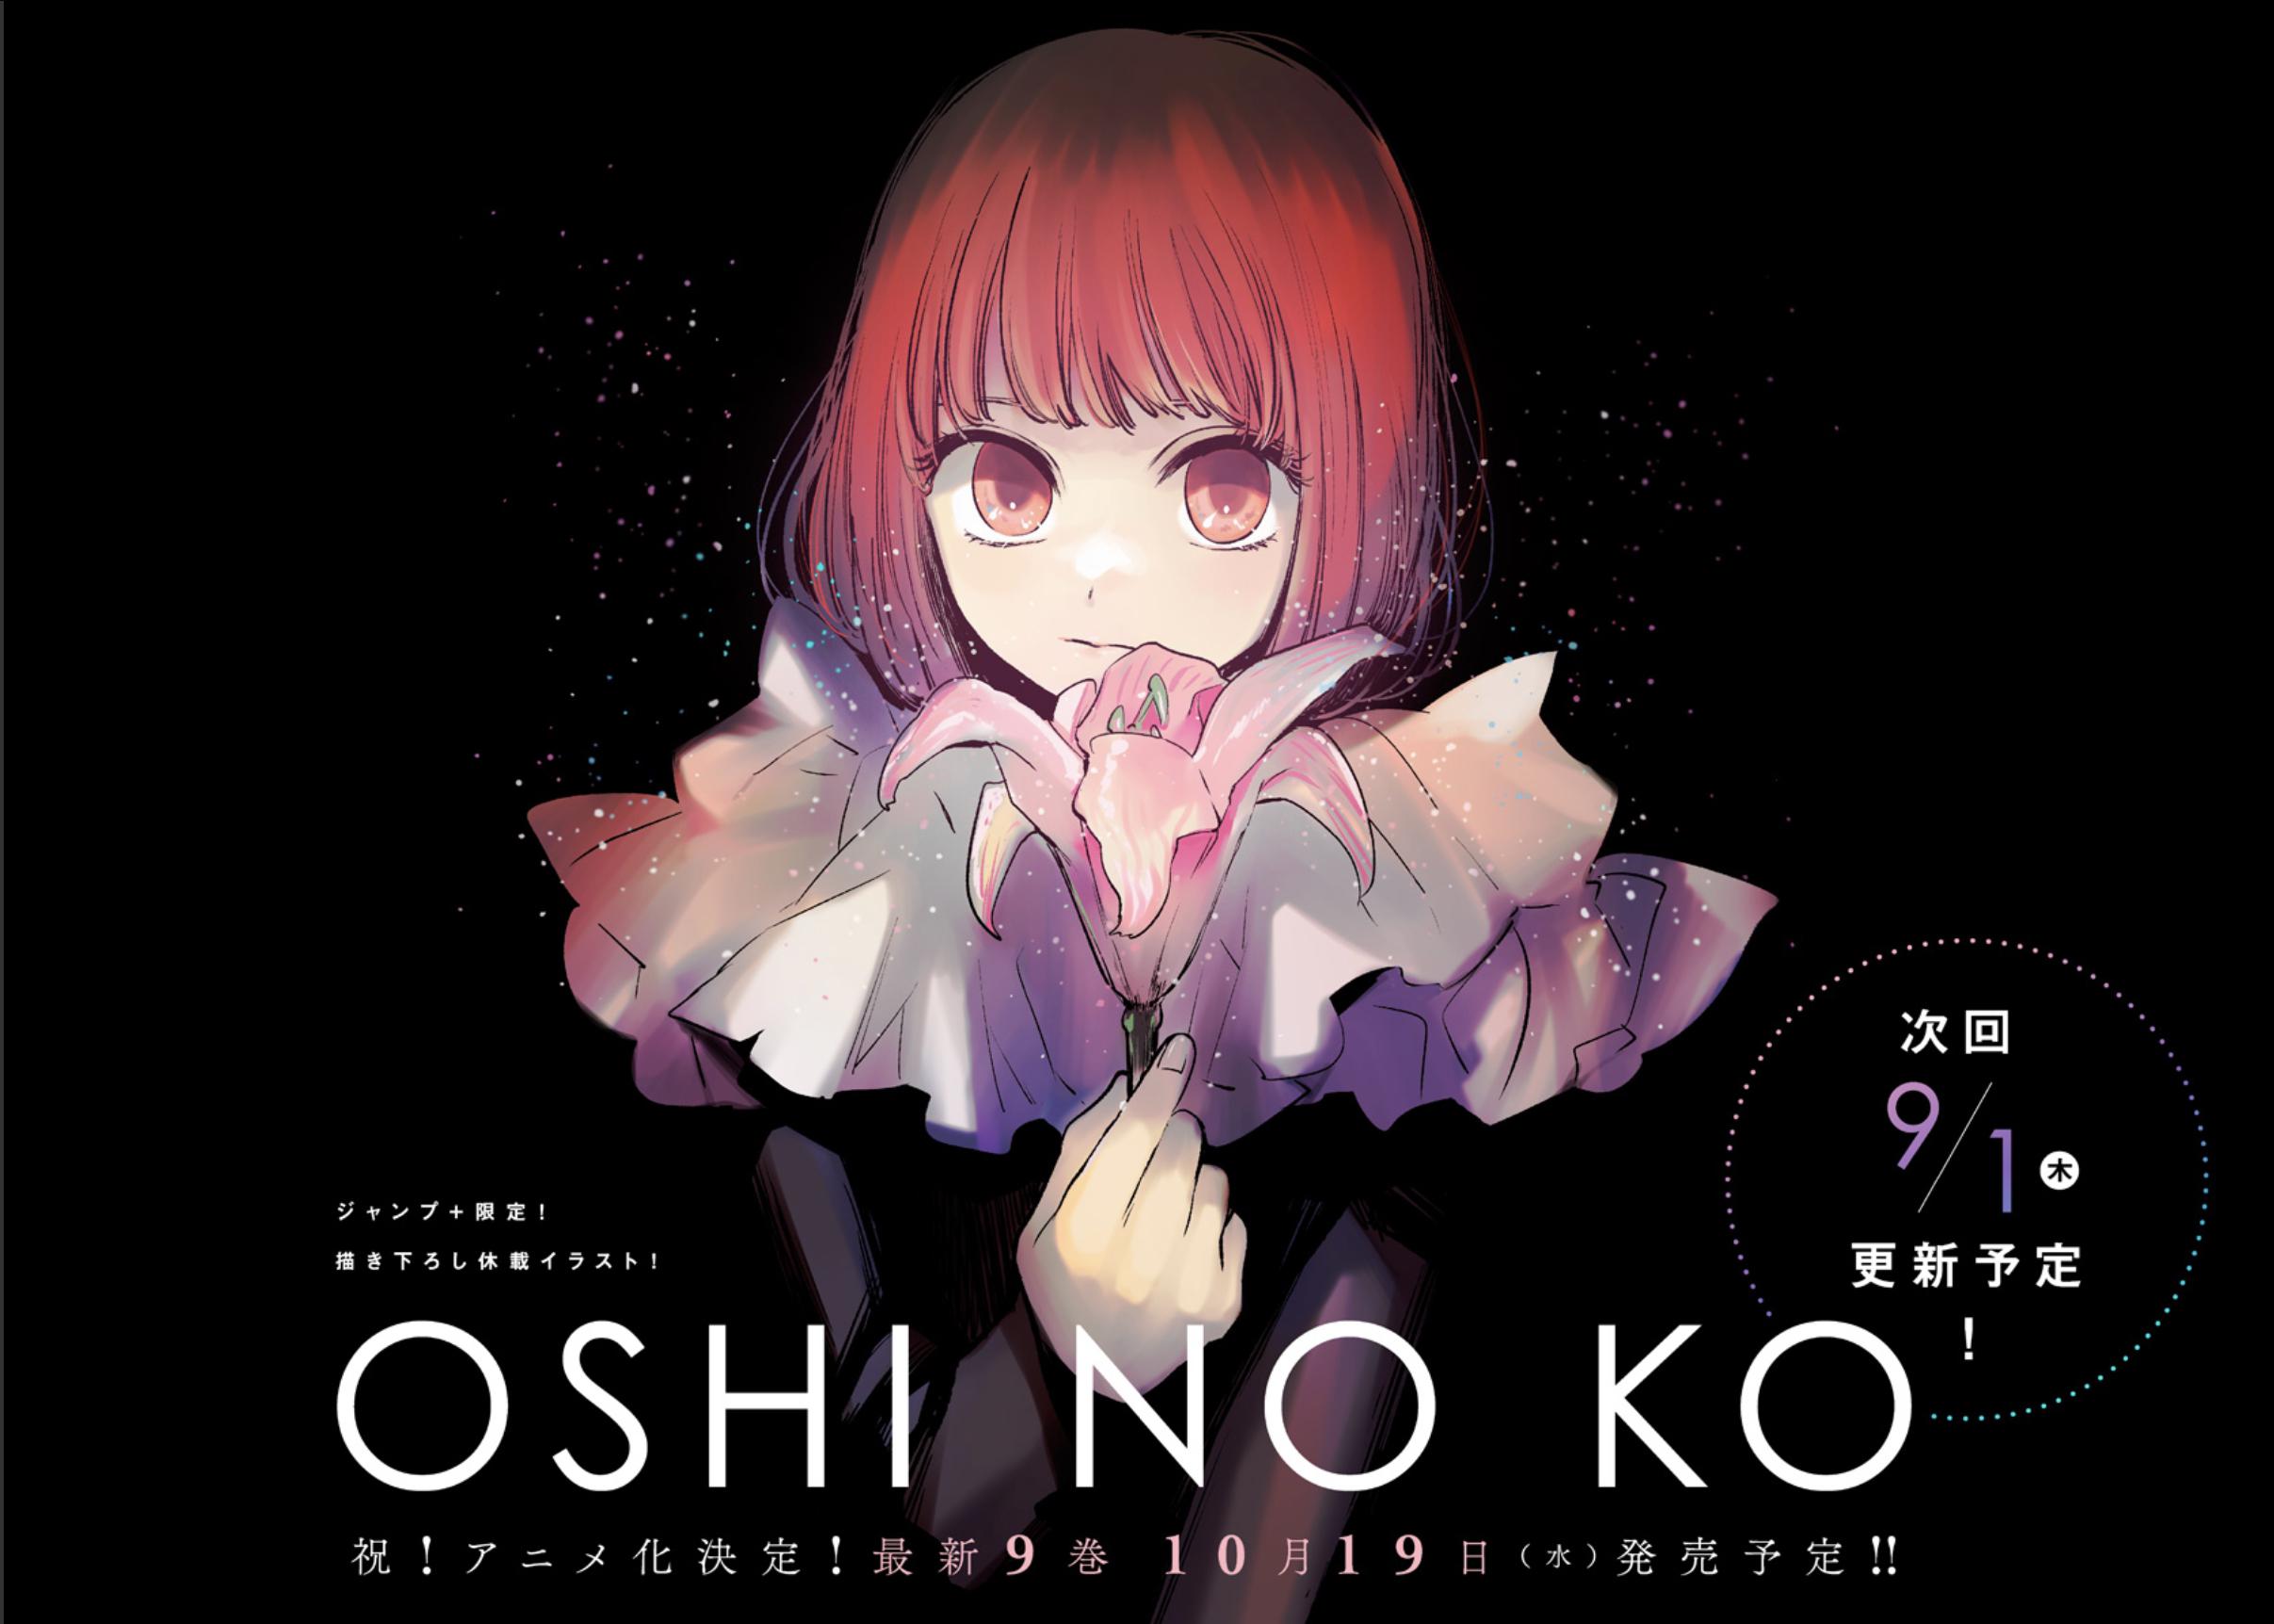 Oshi no Ko Episode 8 Discussion (120 - ) - Forums 